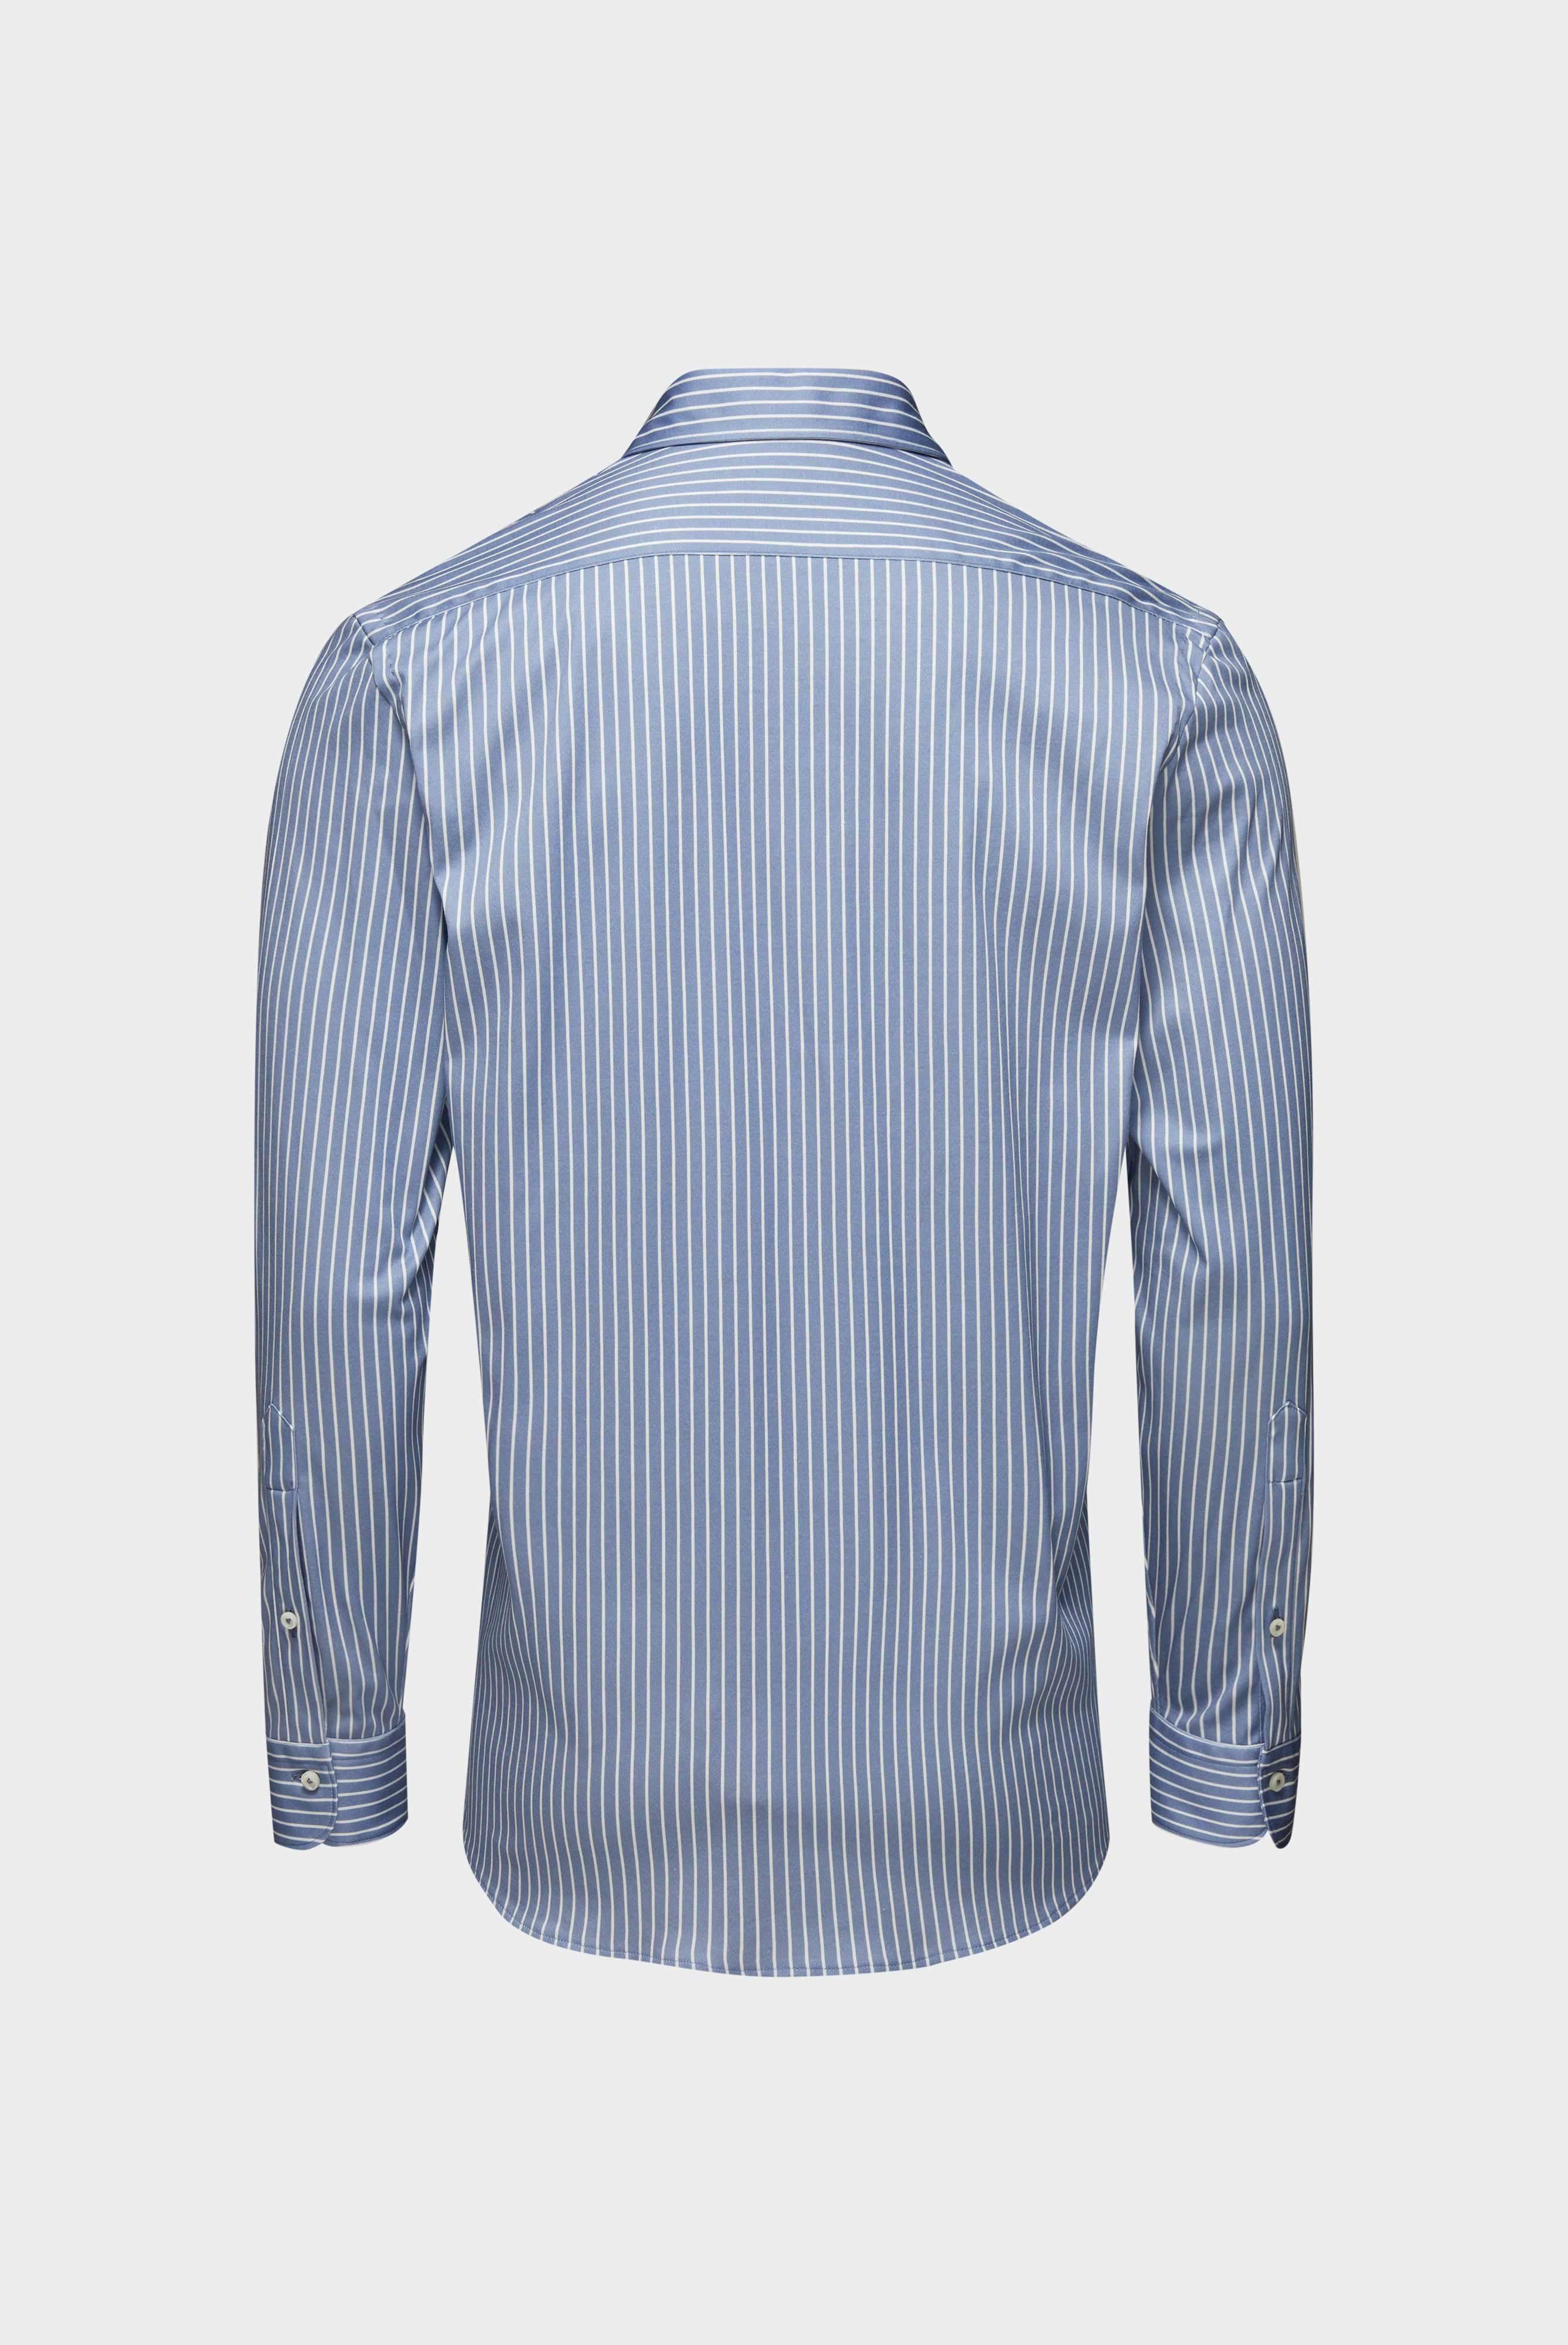 Jersey Shirts+Jersey Pinstripe Print Shirt in Swiss Cotton+20.1683.WI.187755.740.S